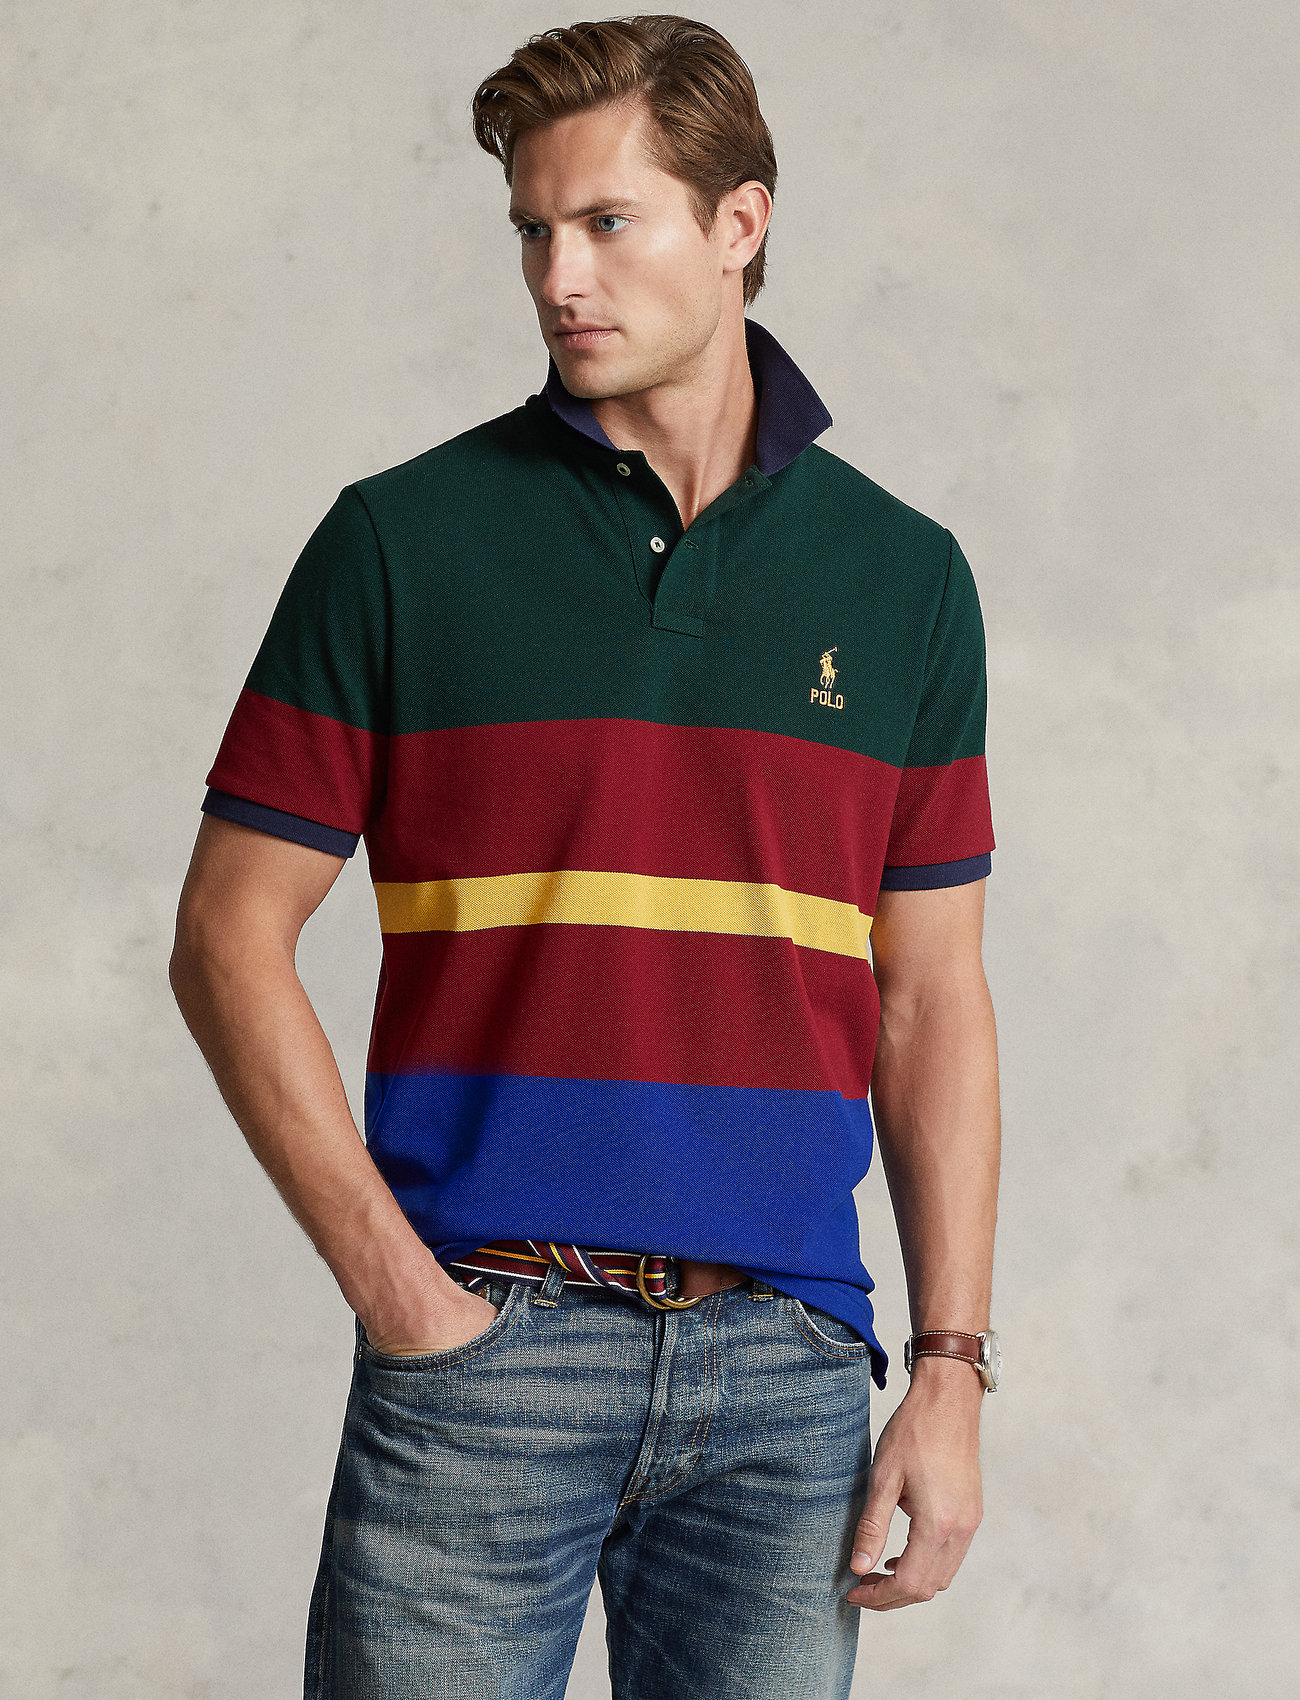 Sydamerika diagonal tilnærmelse Polo Ralph Lauren Classic Fit Mesh Polo Shirt - Short-sleeved polos - Boozt .com